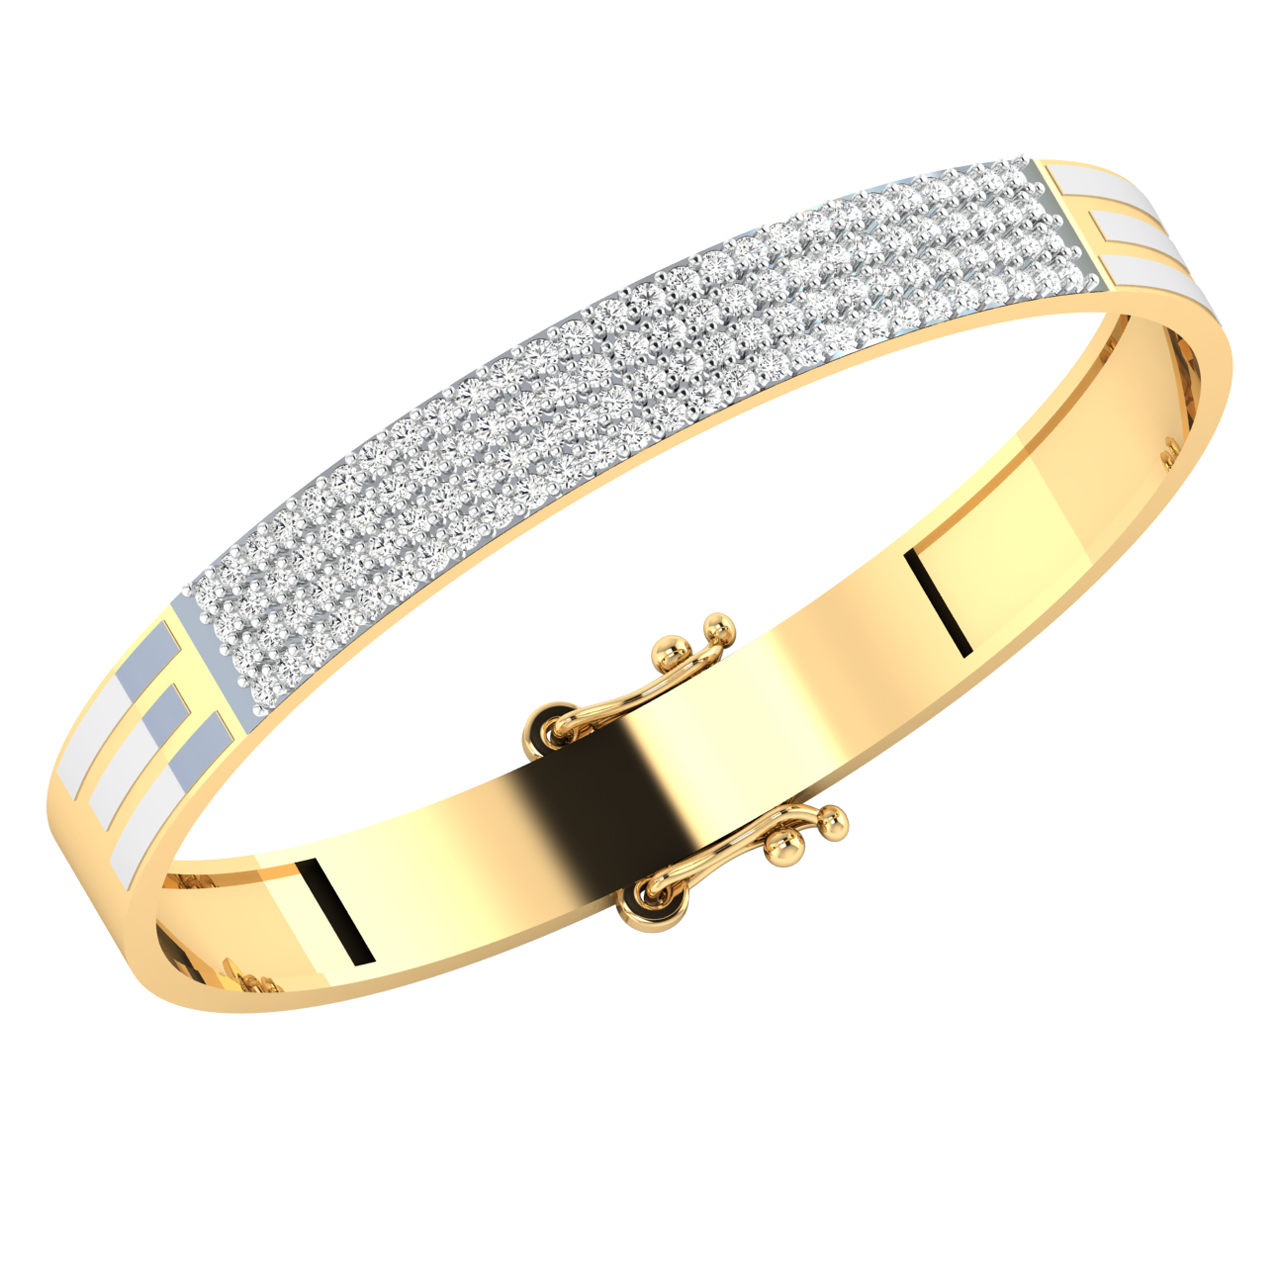 Buy KISNA Women's Real Diamond Jewellery 14KT SI Diamond Bracelet Trio,  Rose Gold at Amazon.in